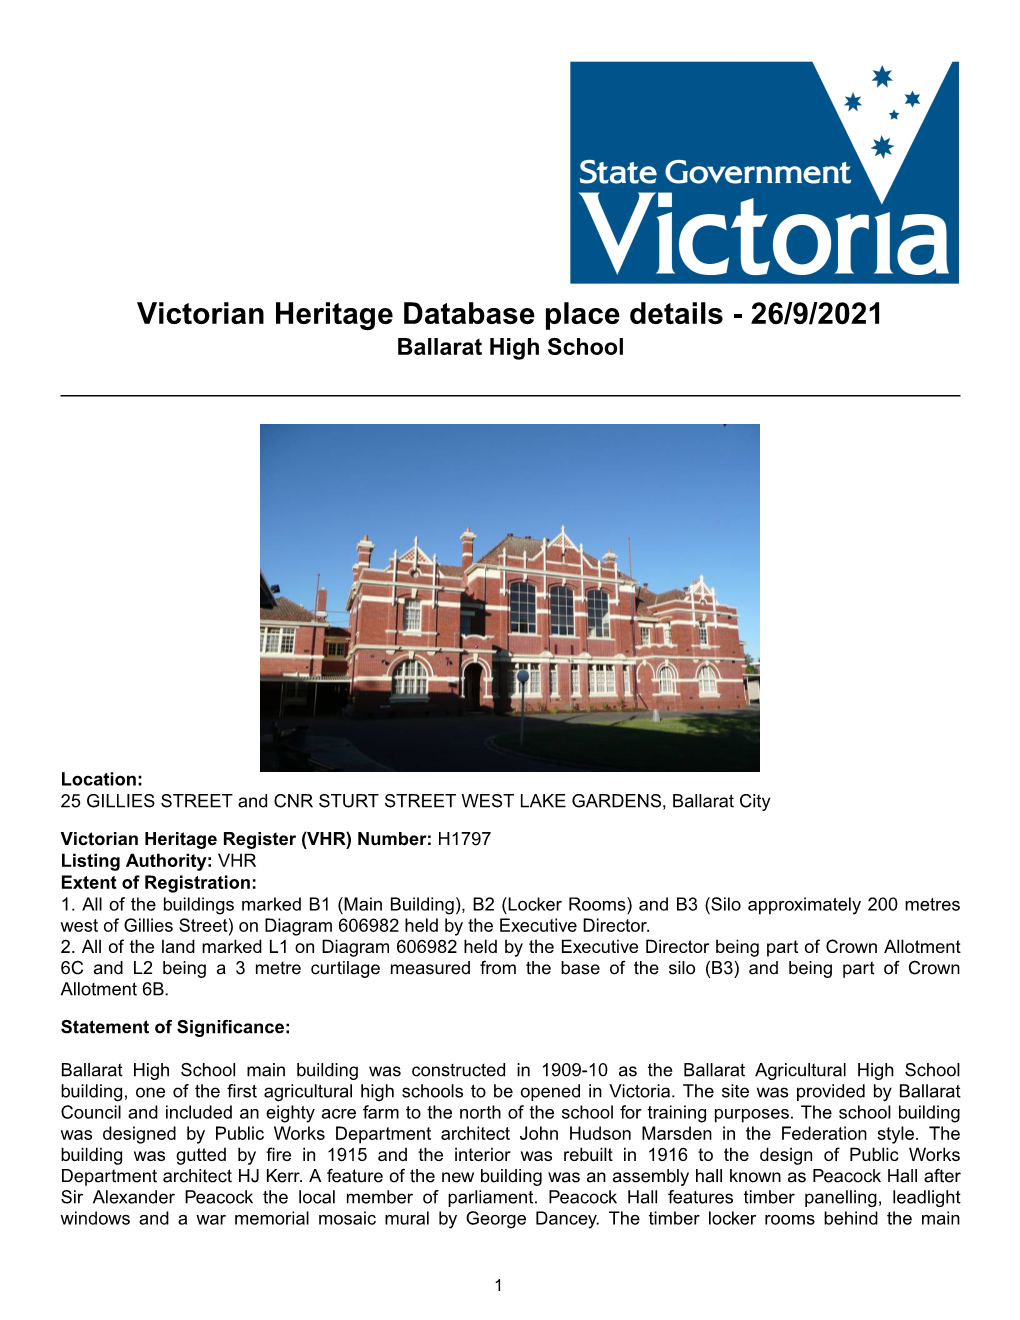 Victorian Heritage Database Place Details - 26/9/2021 Ballarat High School